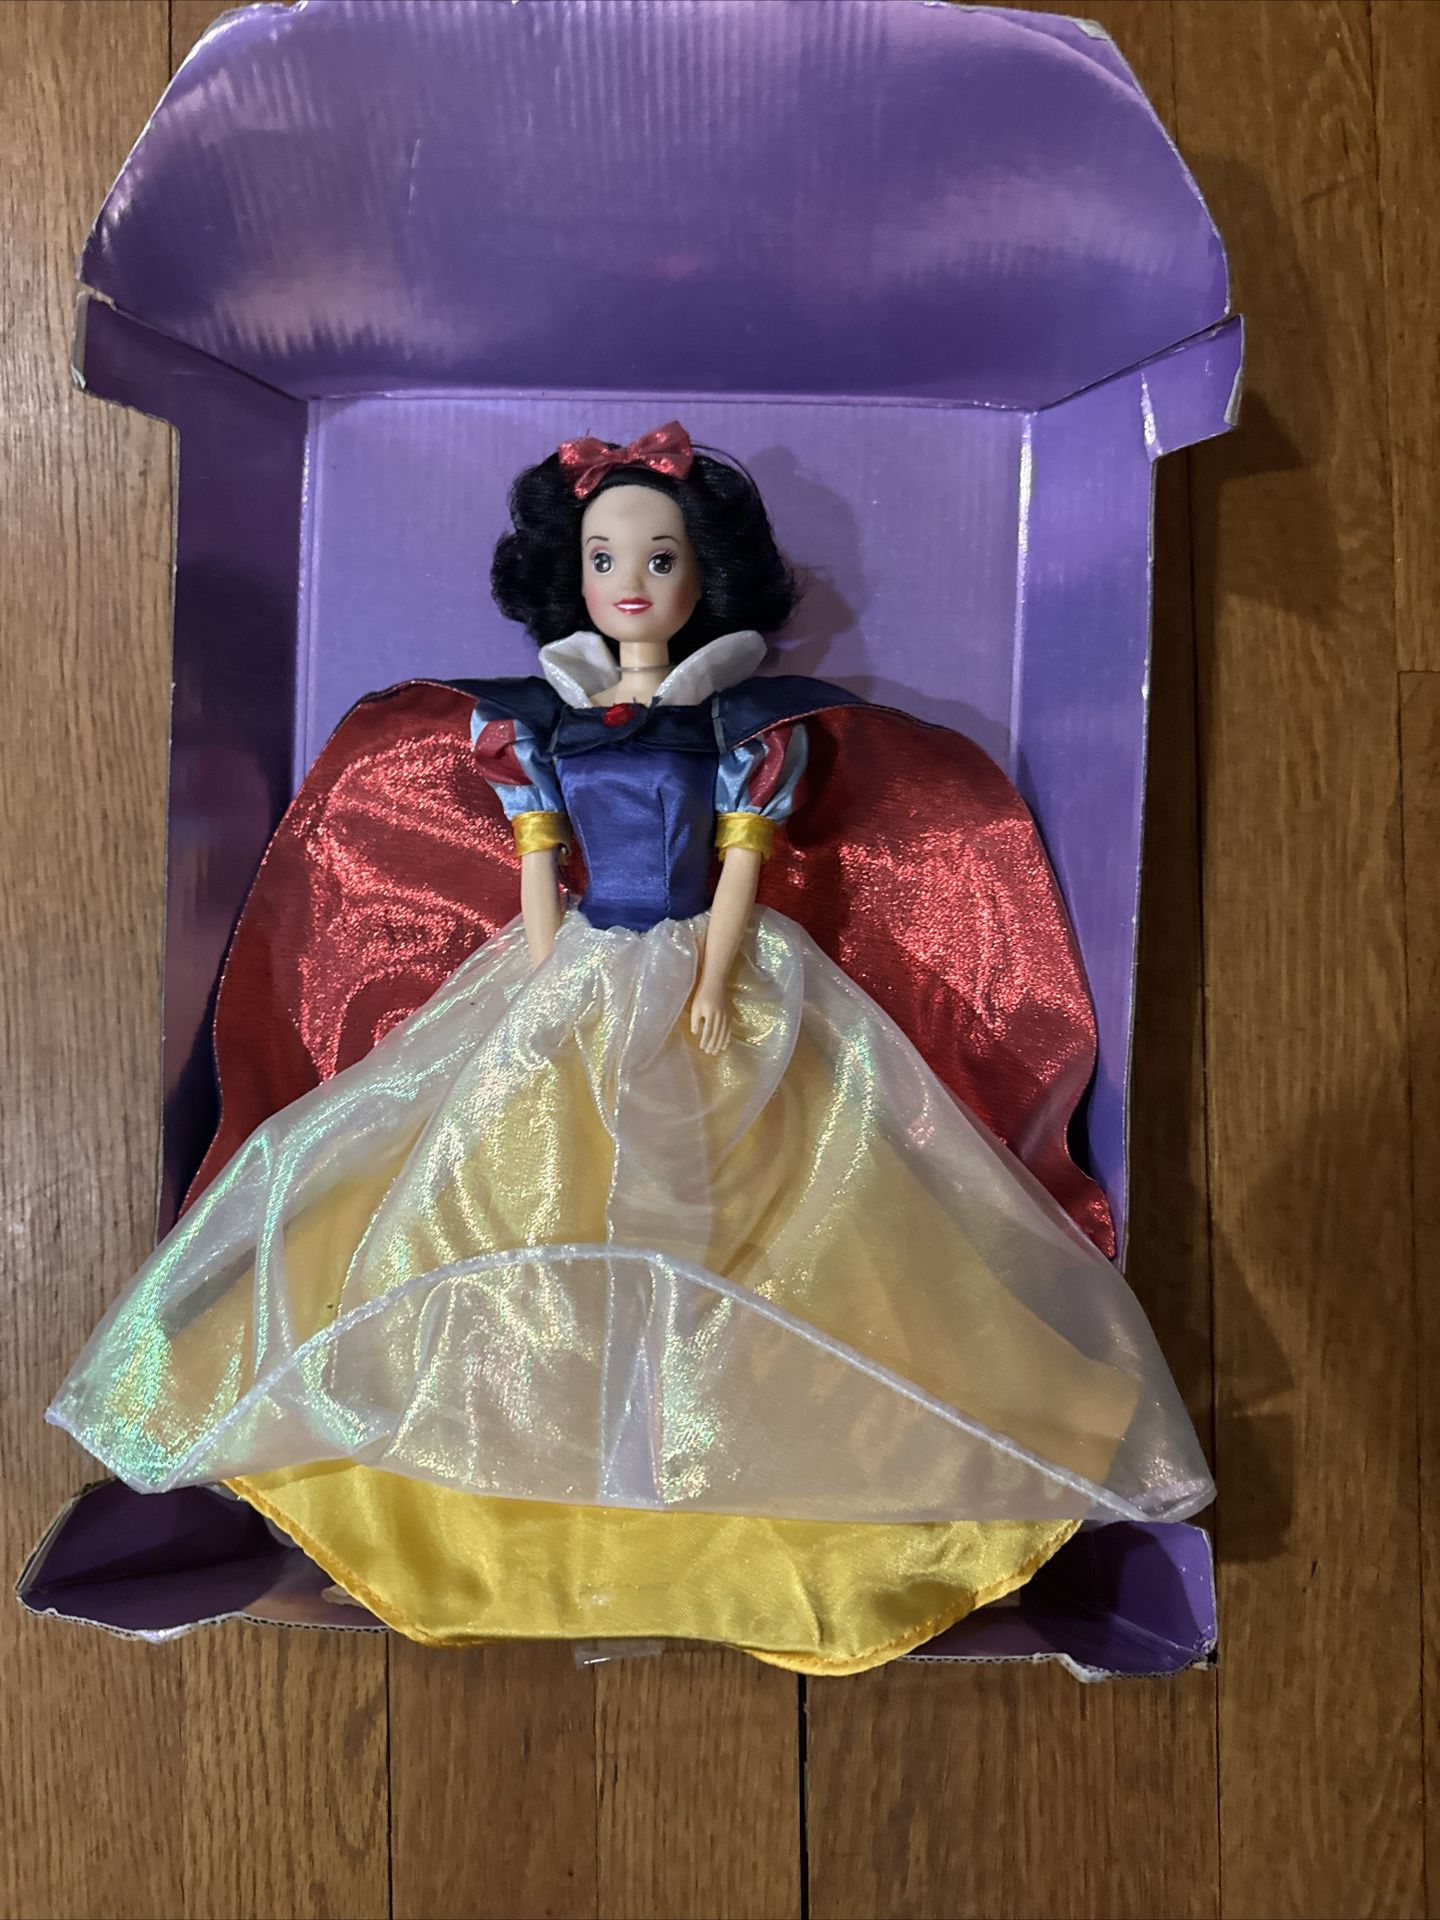 VTG 1997 Disney Park Exclusive Snow White Disney's Classic Doll Collection NRFB